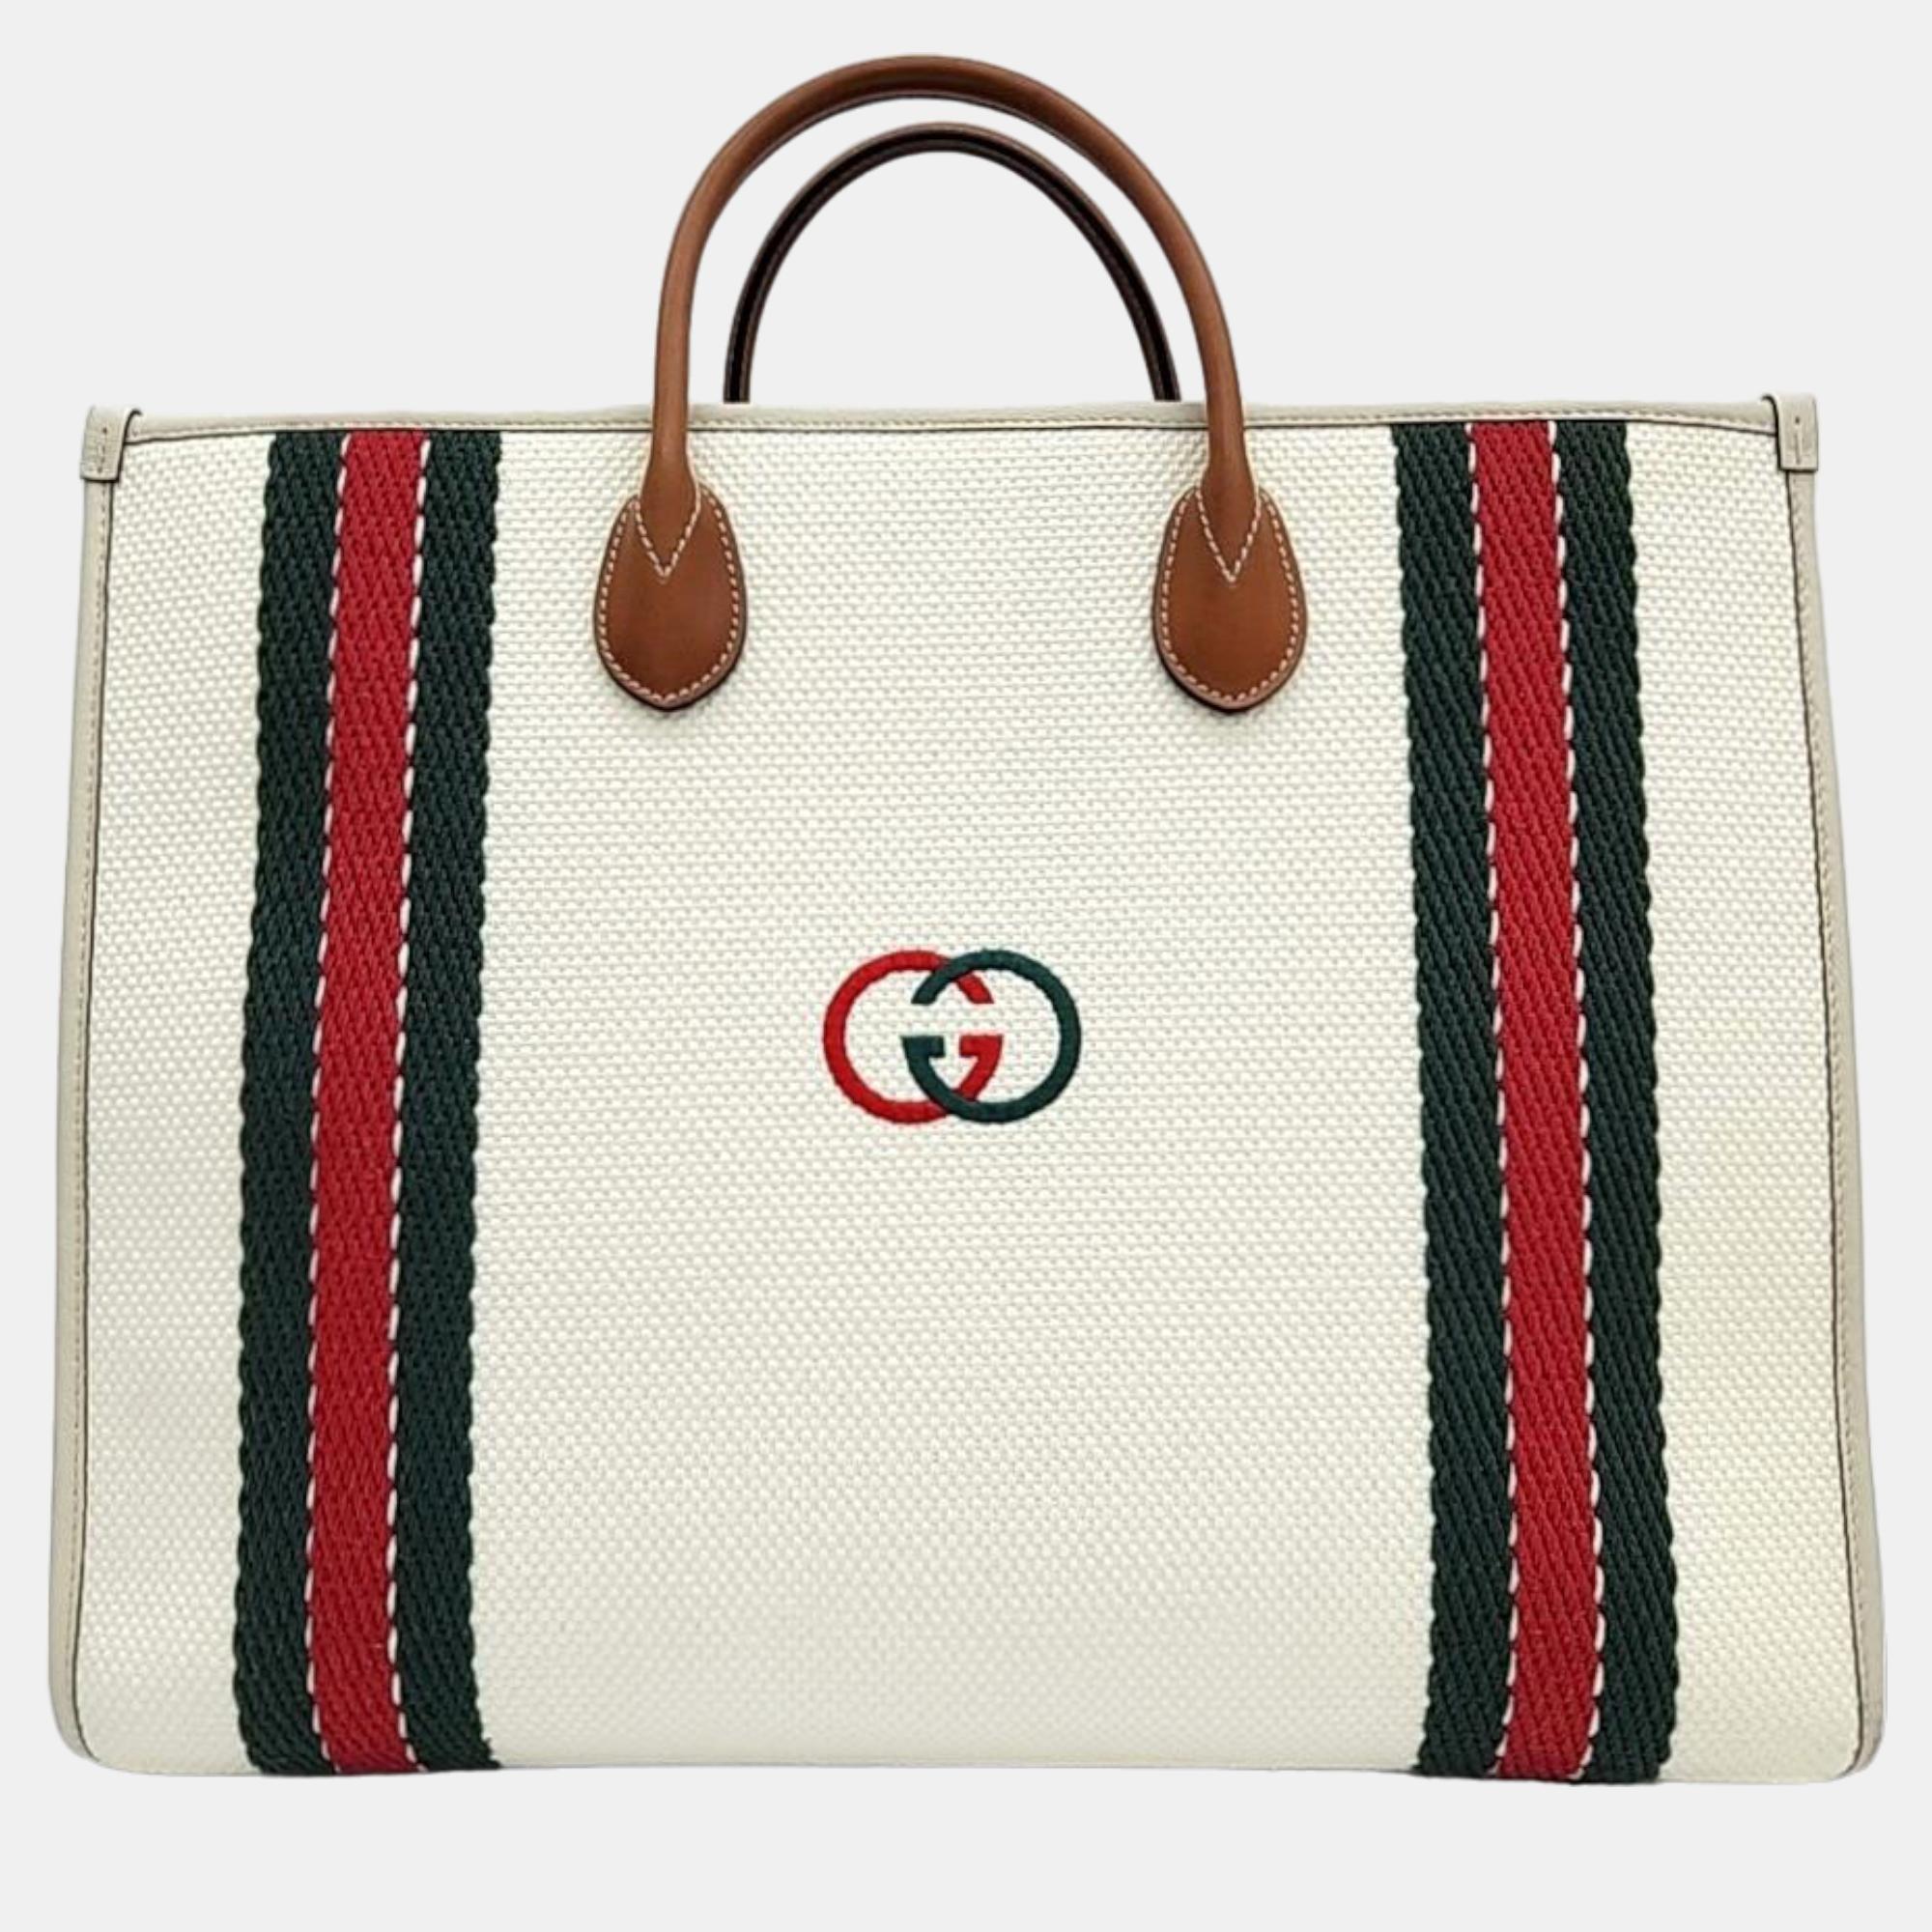 Gucci interlocking canvas tote and shoulder bag (701733)